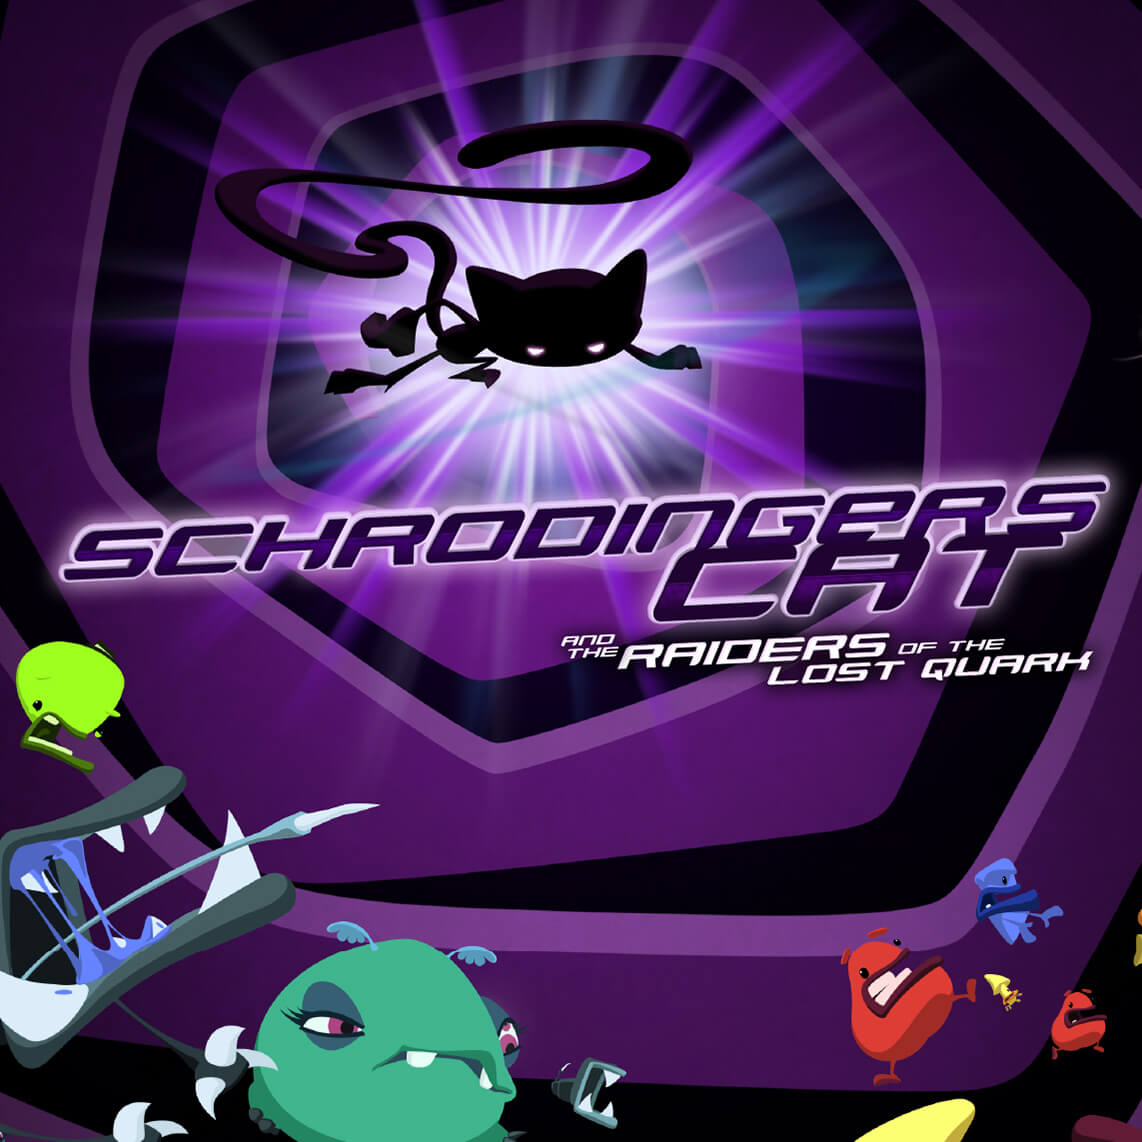 Schrödinger's Cats (9th Level Games)